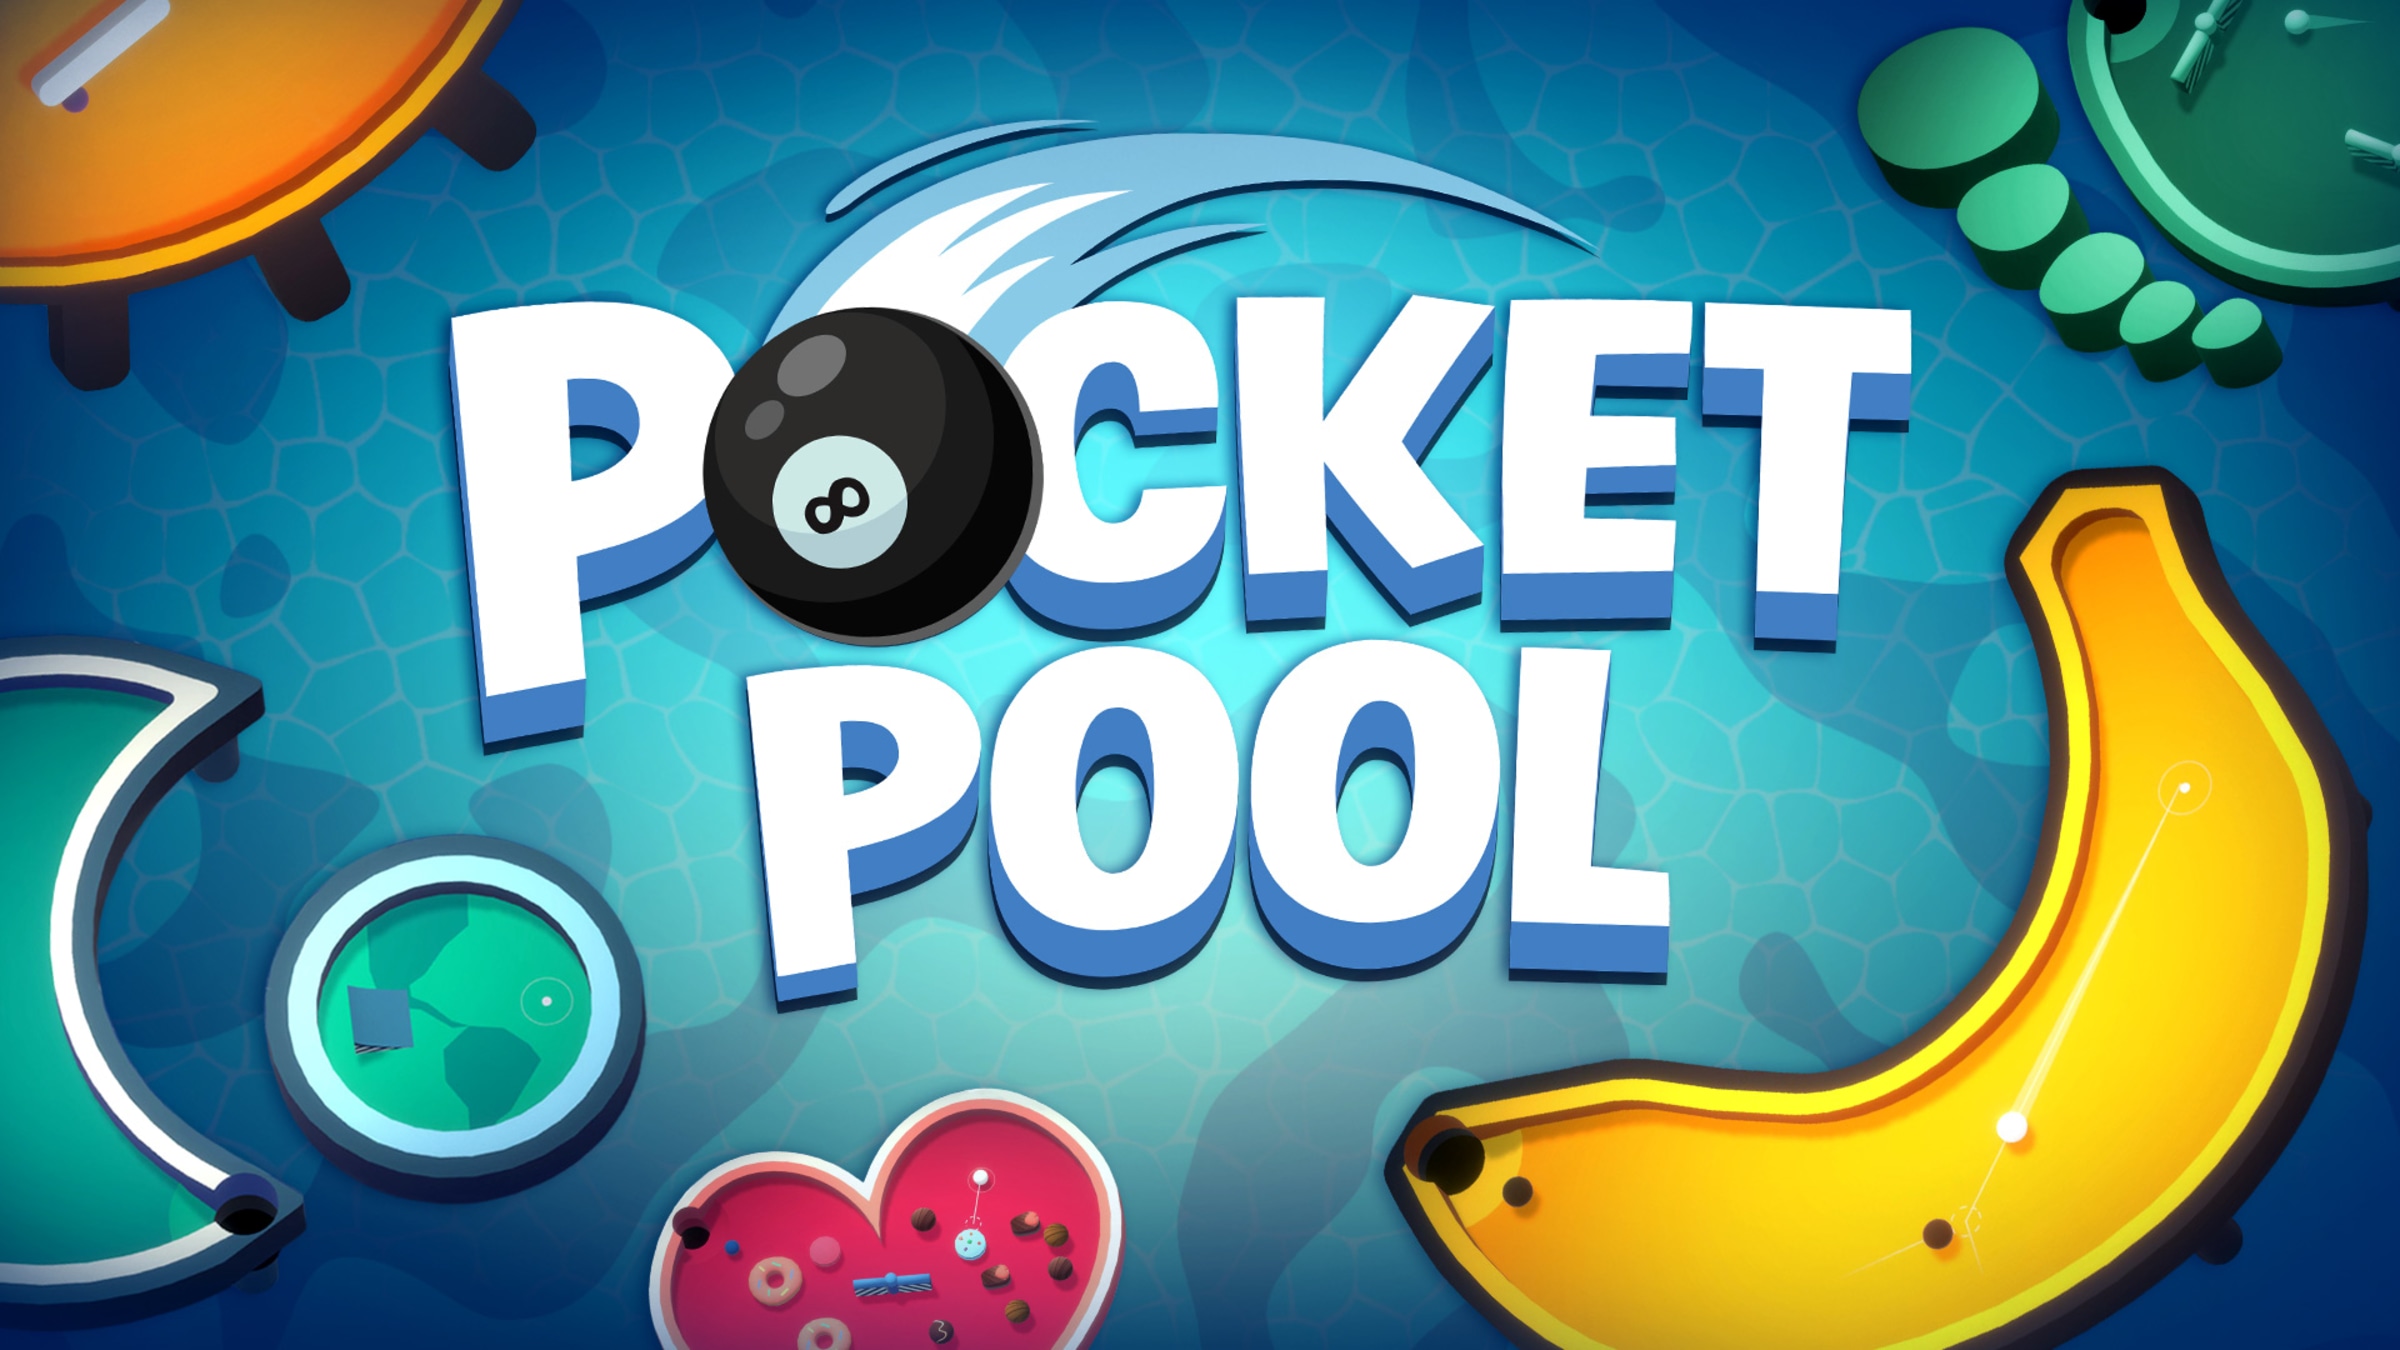 Pocket 8 Pool Ball by Creative Software Studio